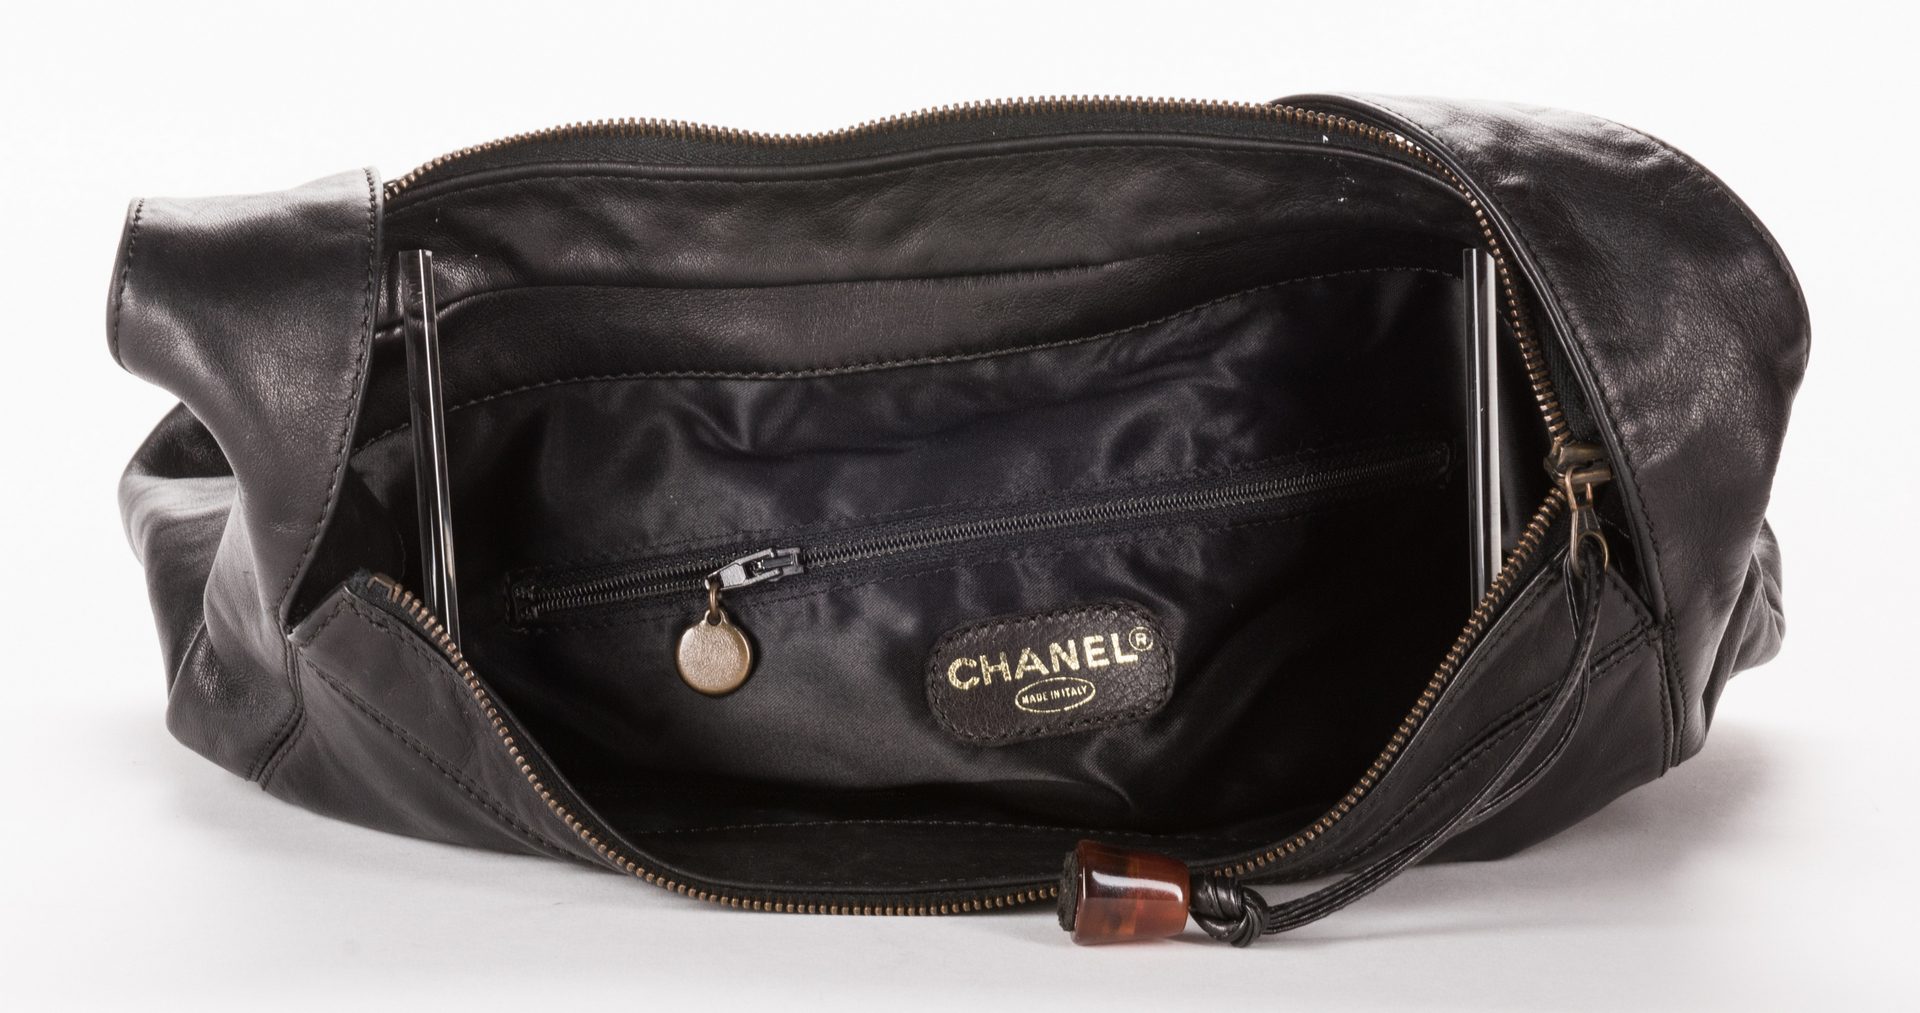 Lot 838: 2 Chanel handbags/2 Chanel pins